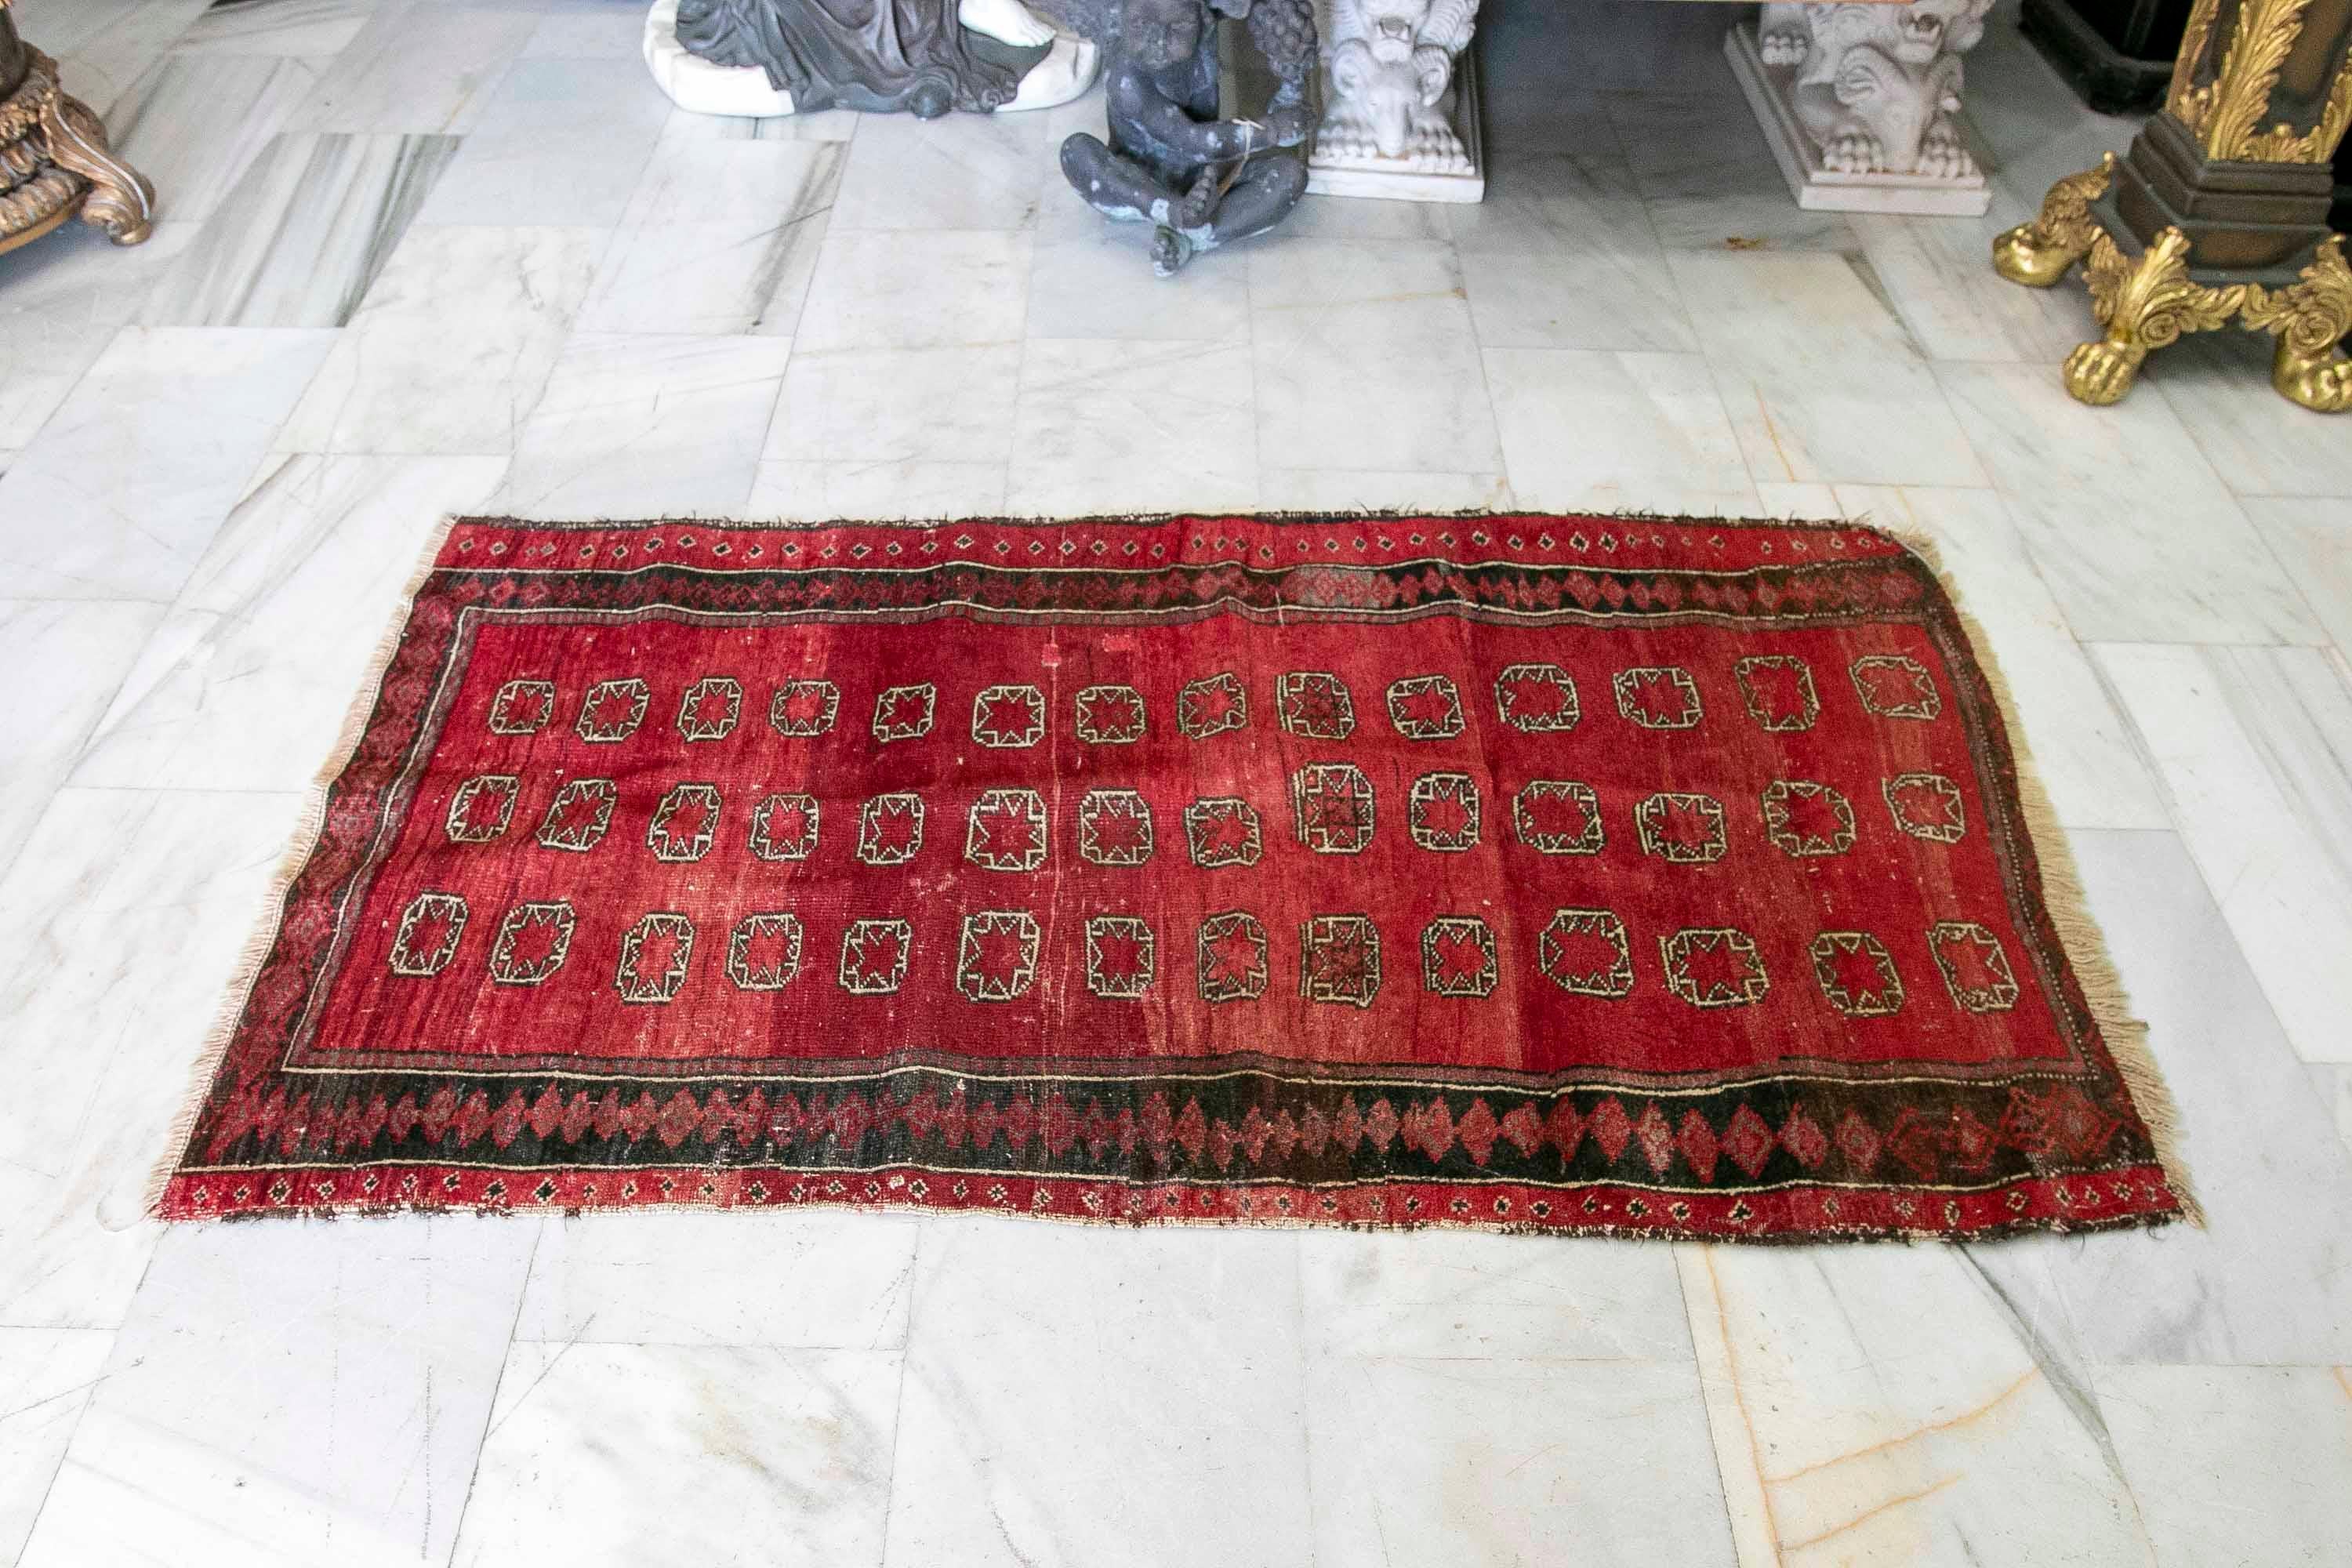 19th century Turkish Woollen Carpet in Red Tones.